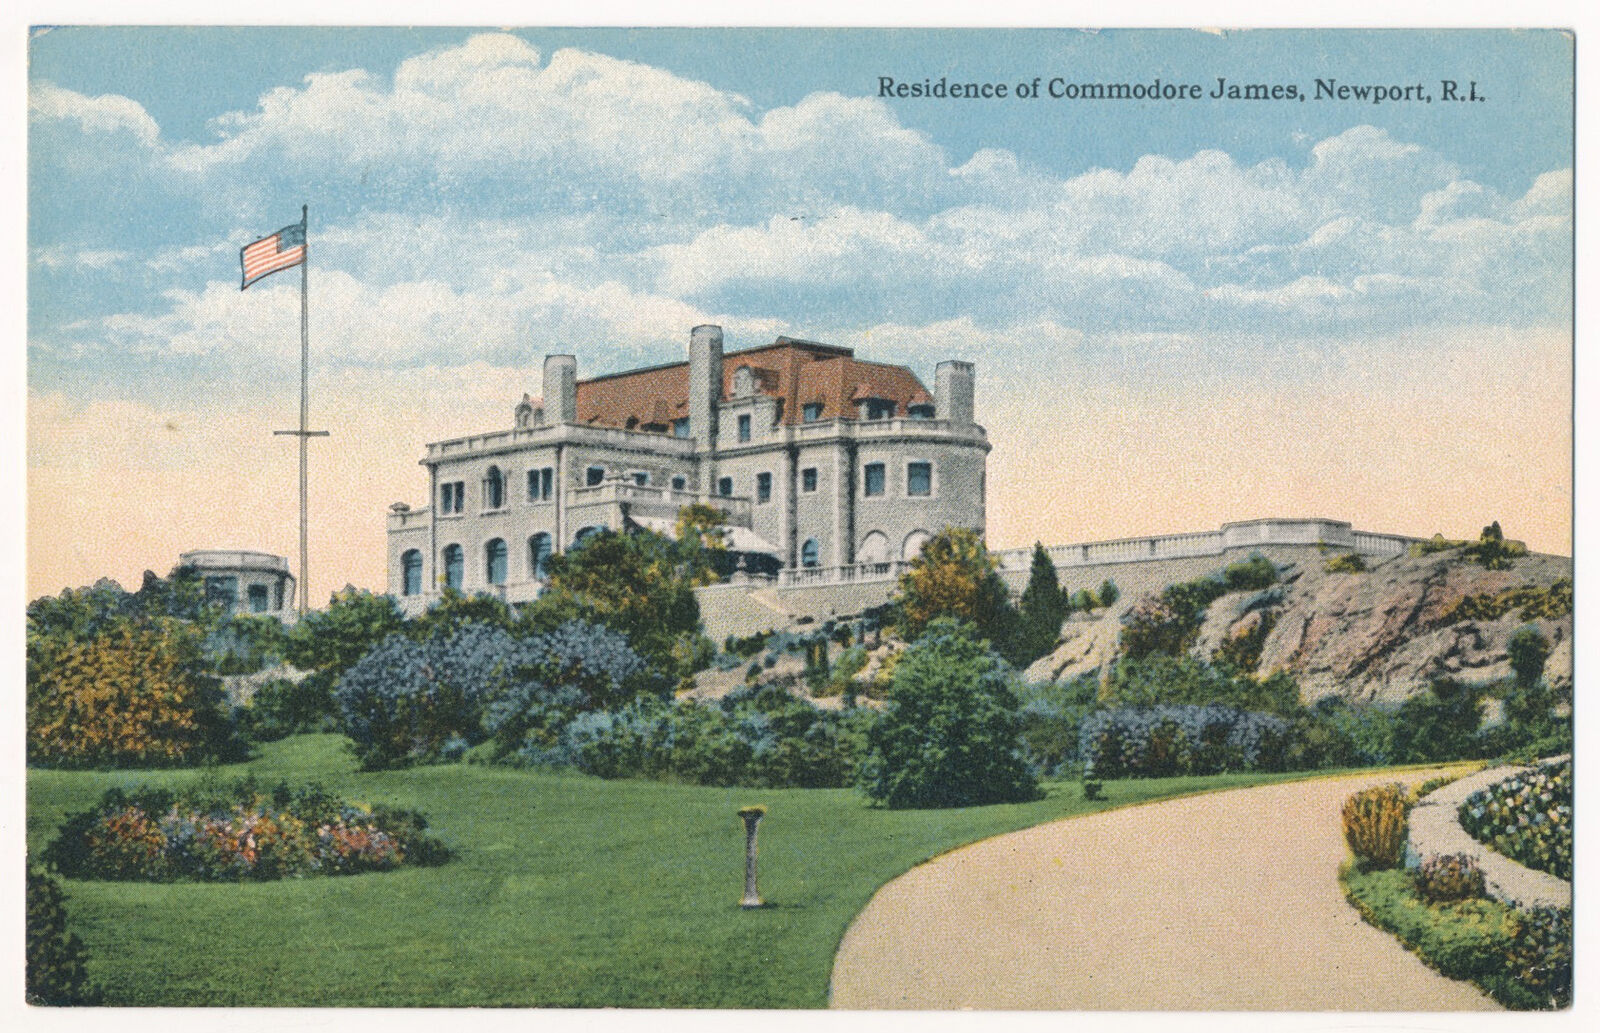 Residence of Commodore James, Newport, Rhode Island